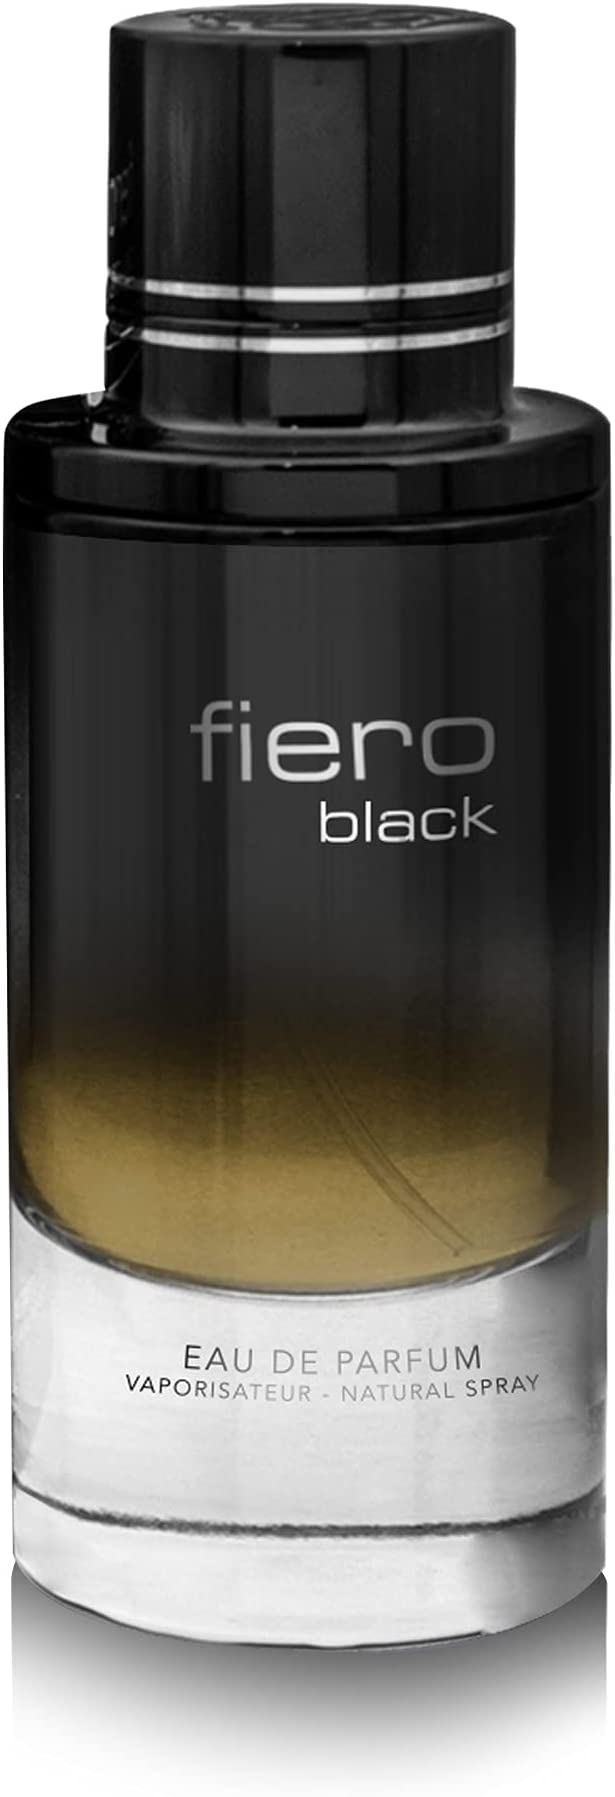 Load image into Gallery viewer, A Fragrance World Fiero Black 100ml Eau de Parfum bottle for men on a white background.
